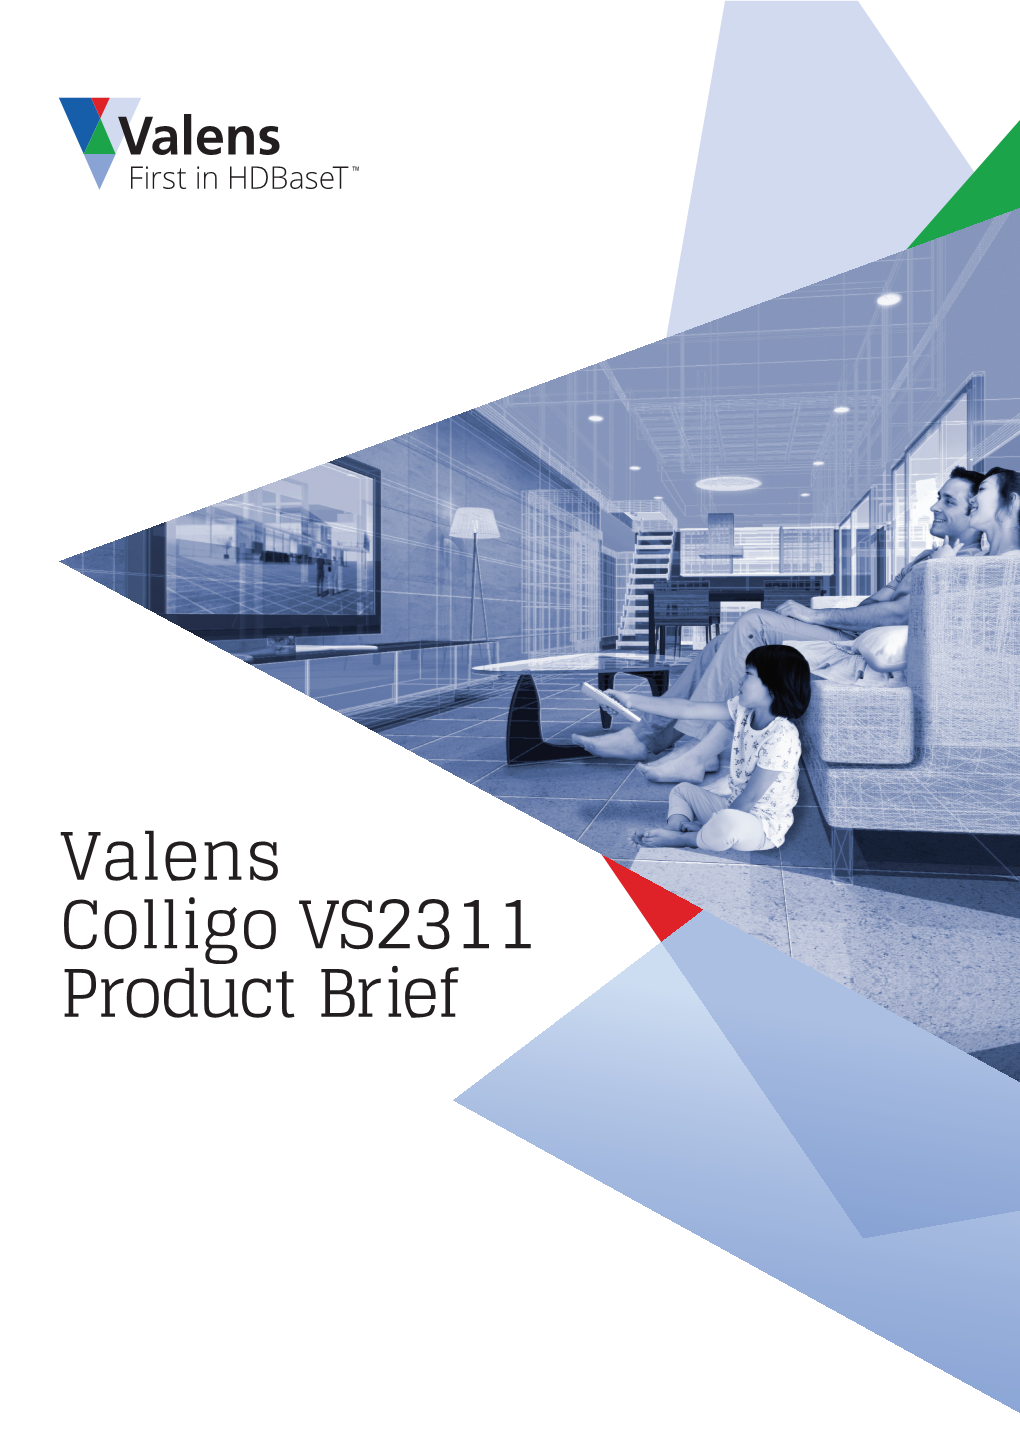 Valens Colligo VS2311 Product Brief Overview